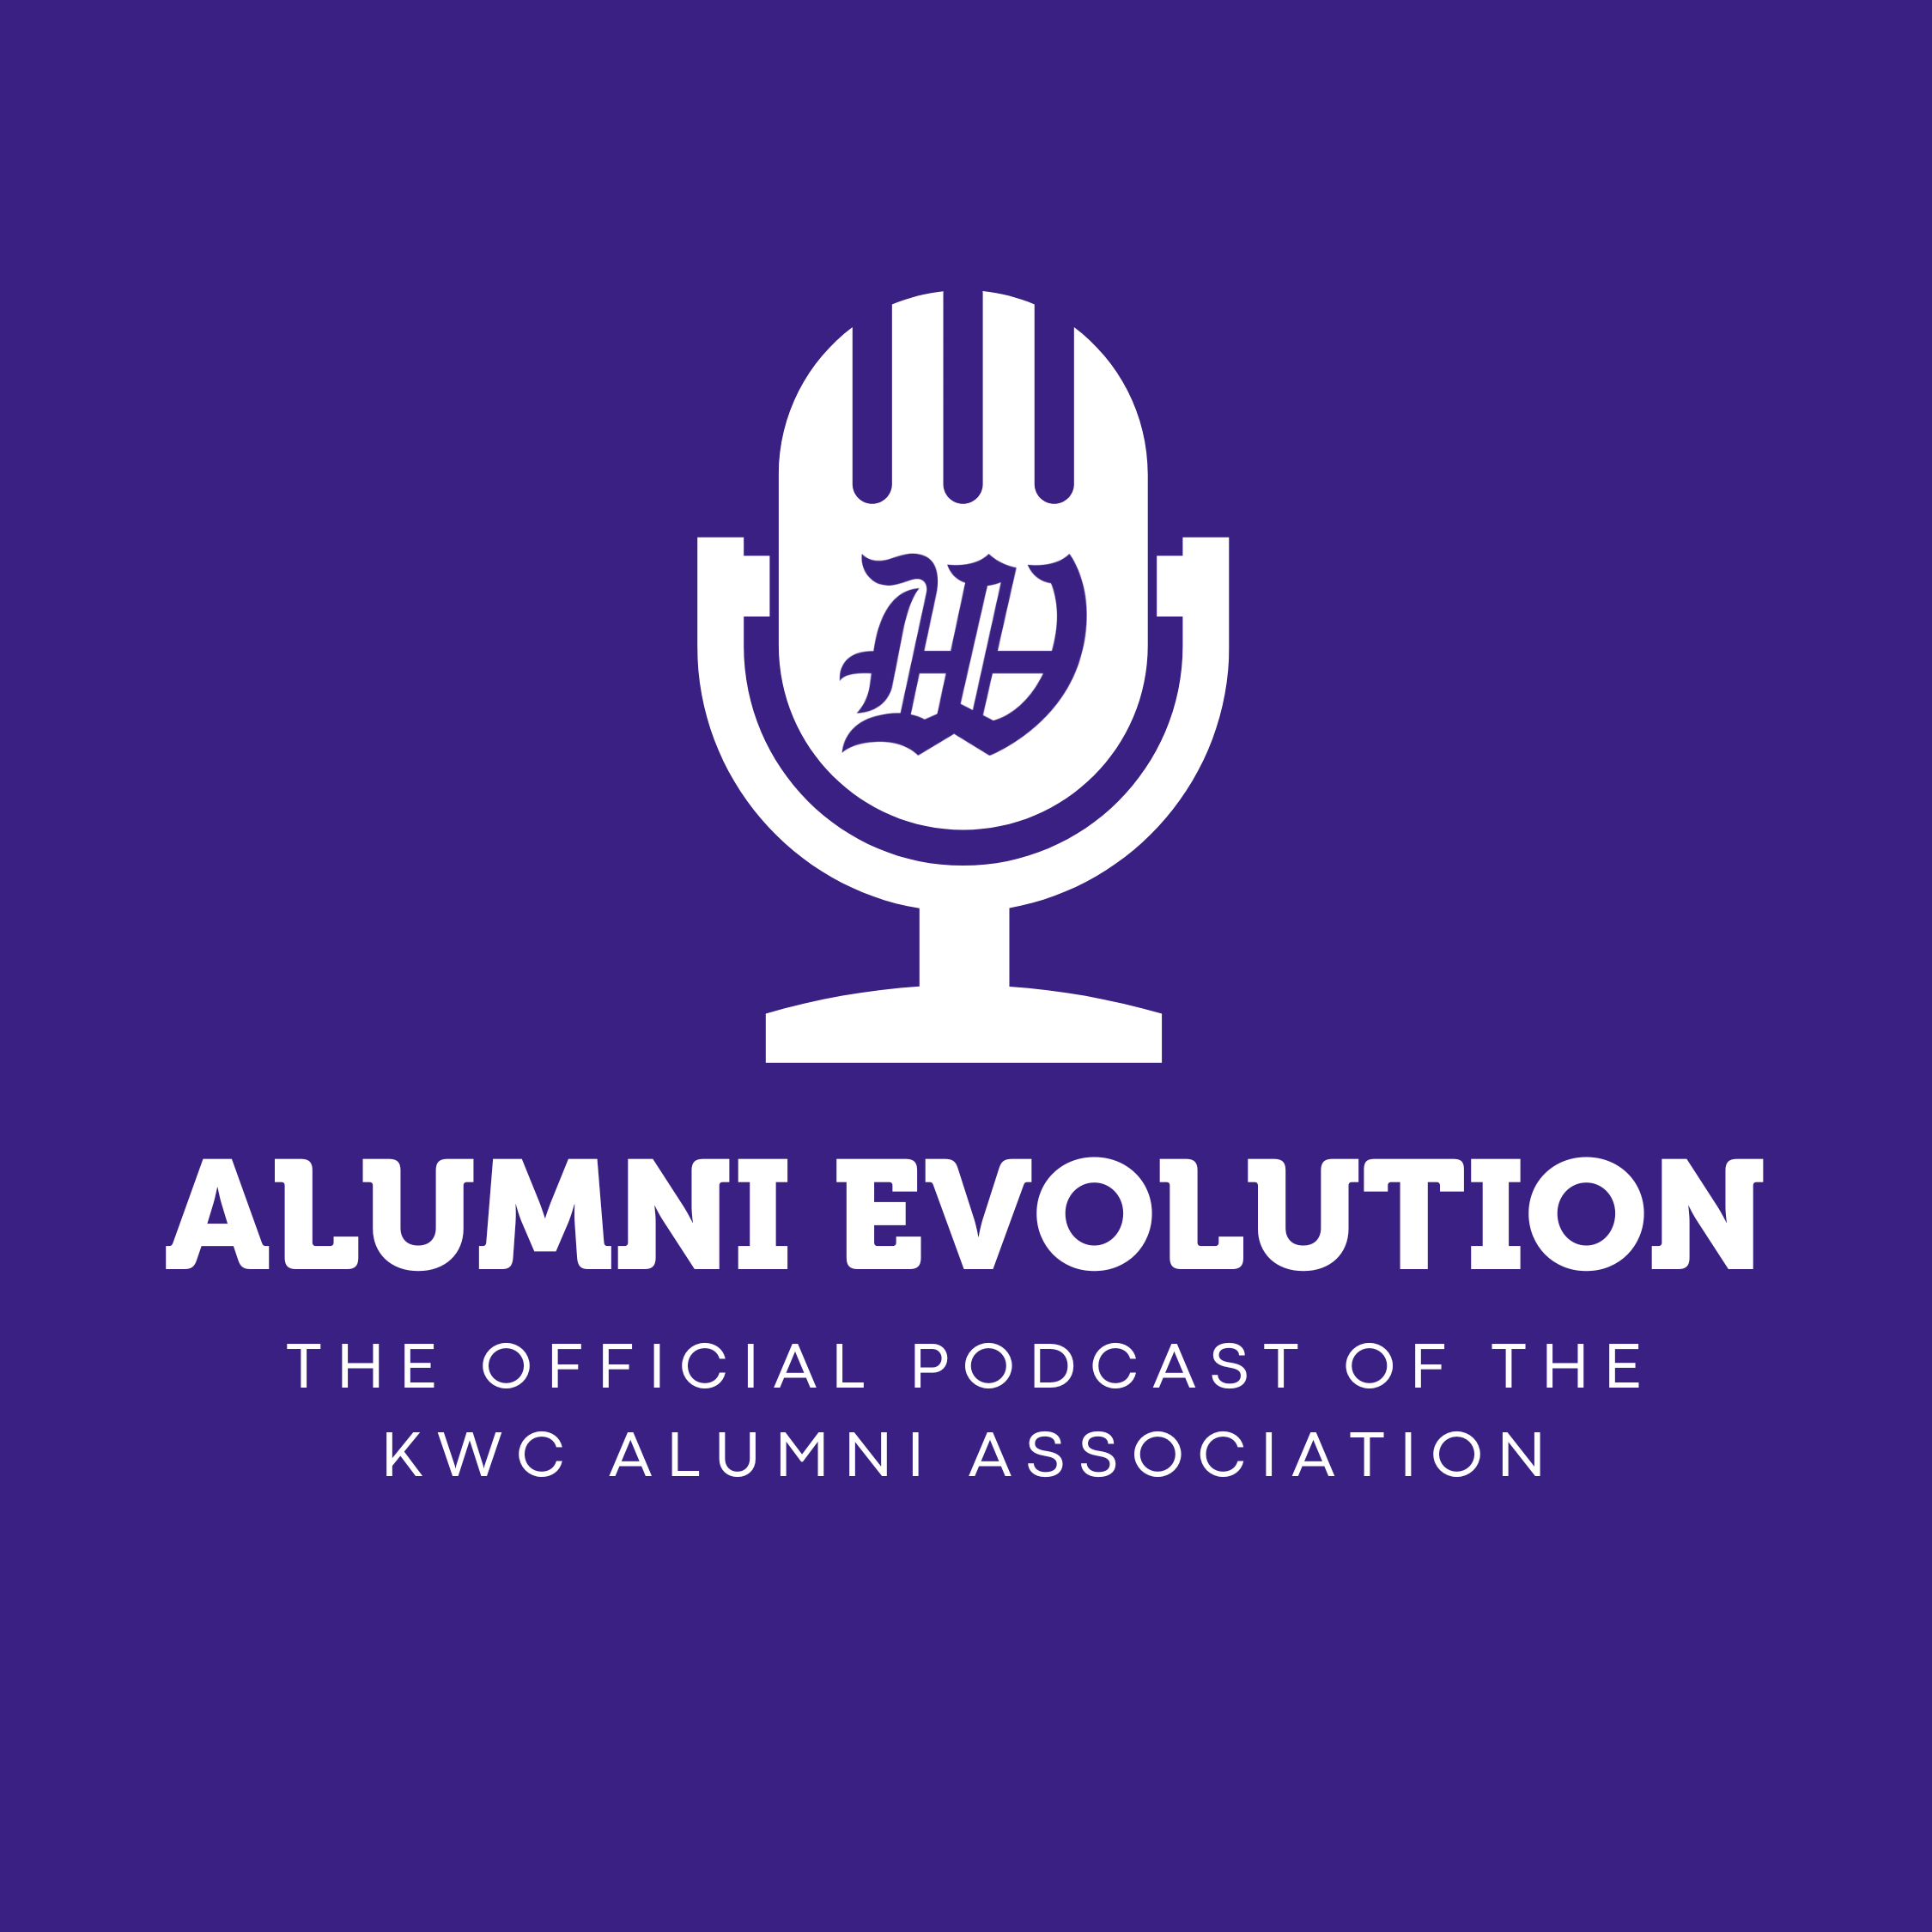 KWC Alumni Association